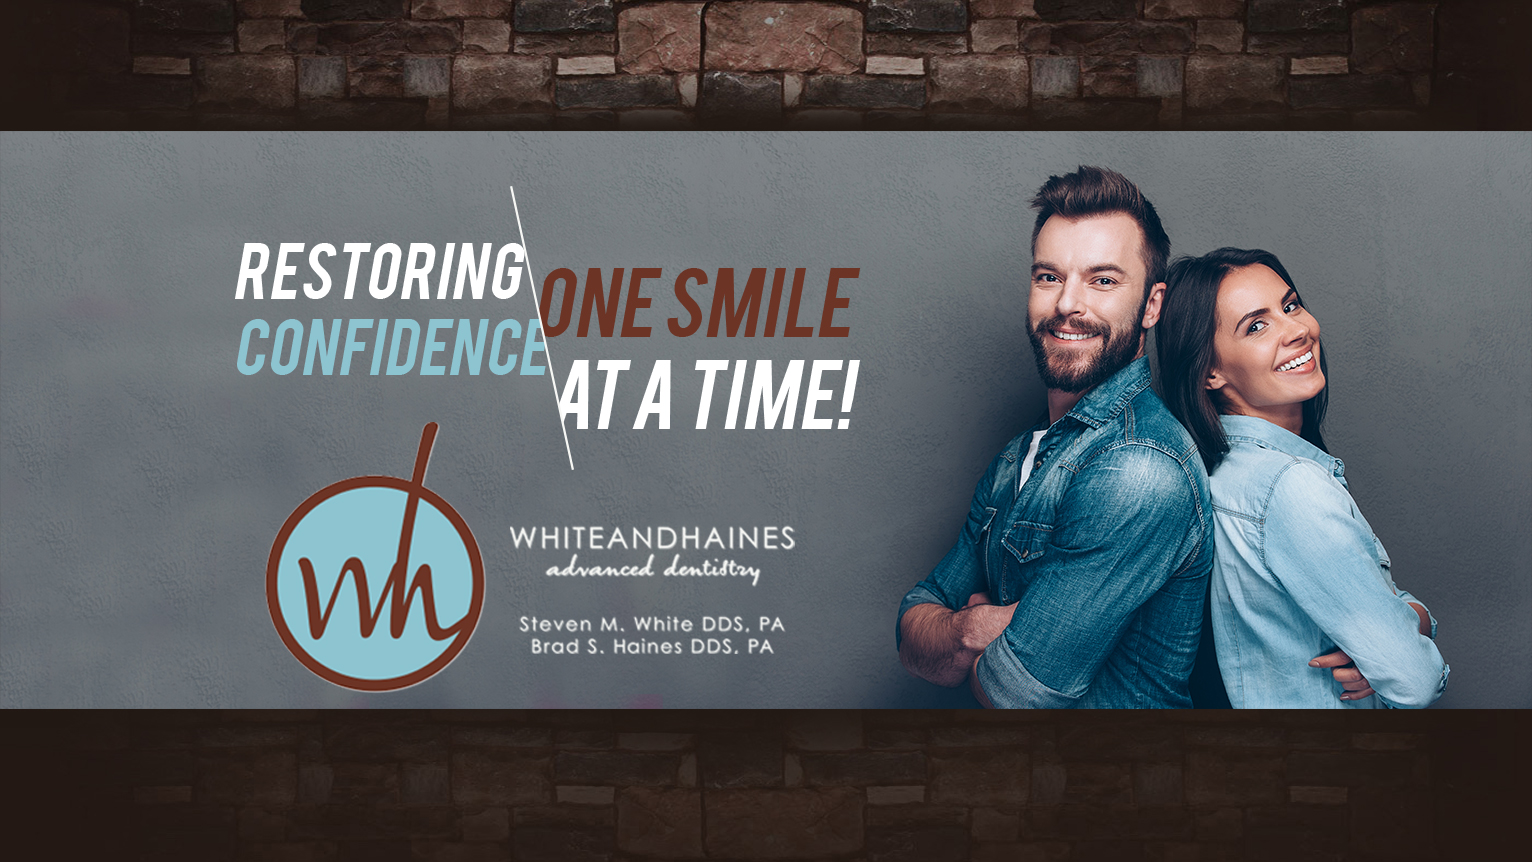 White & Haines Advanced Dentistry